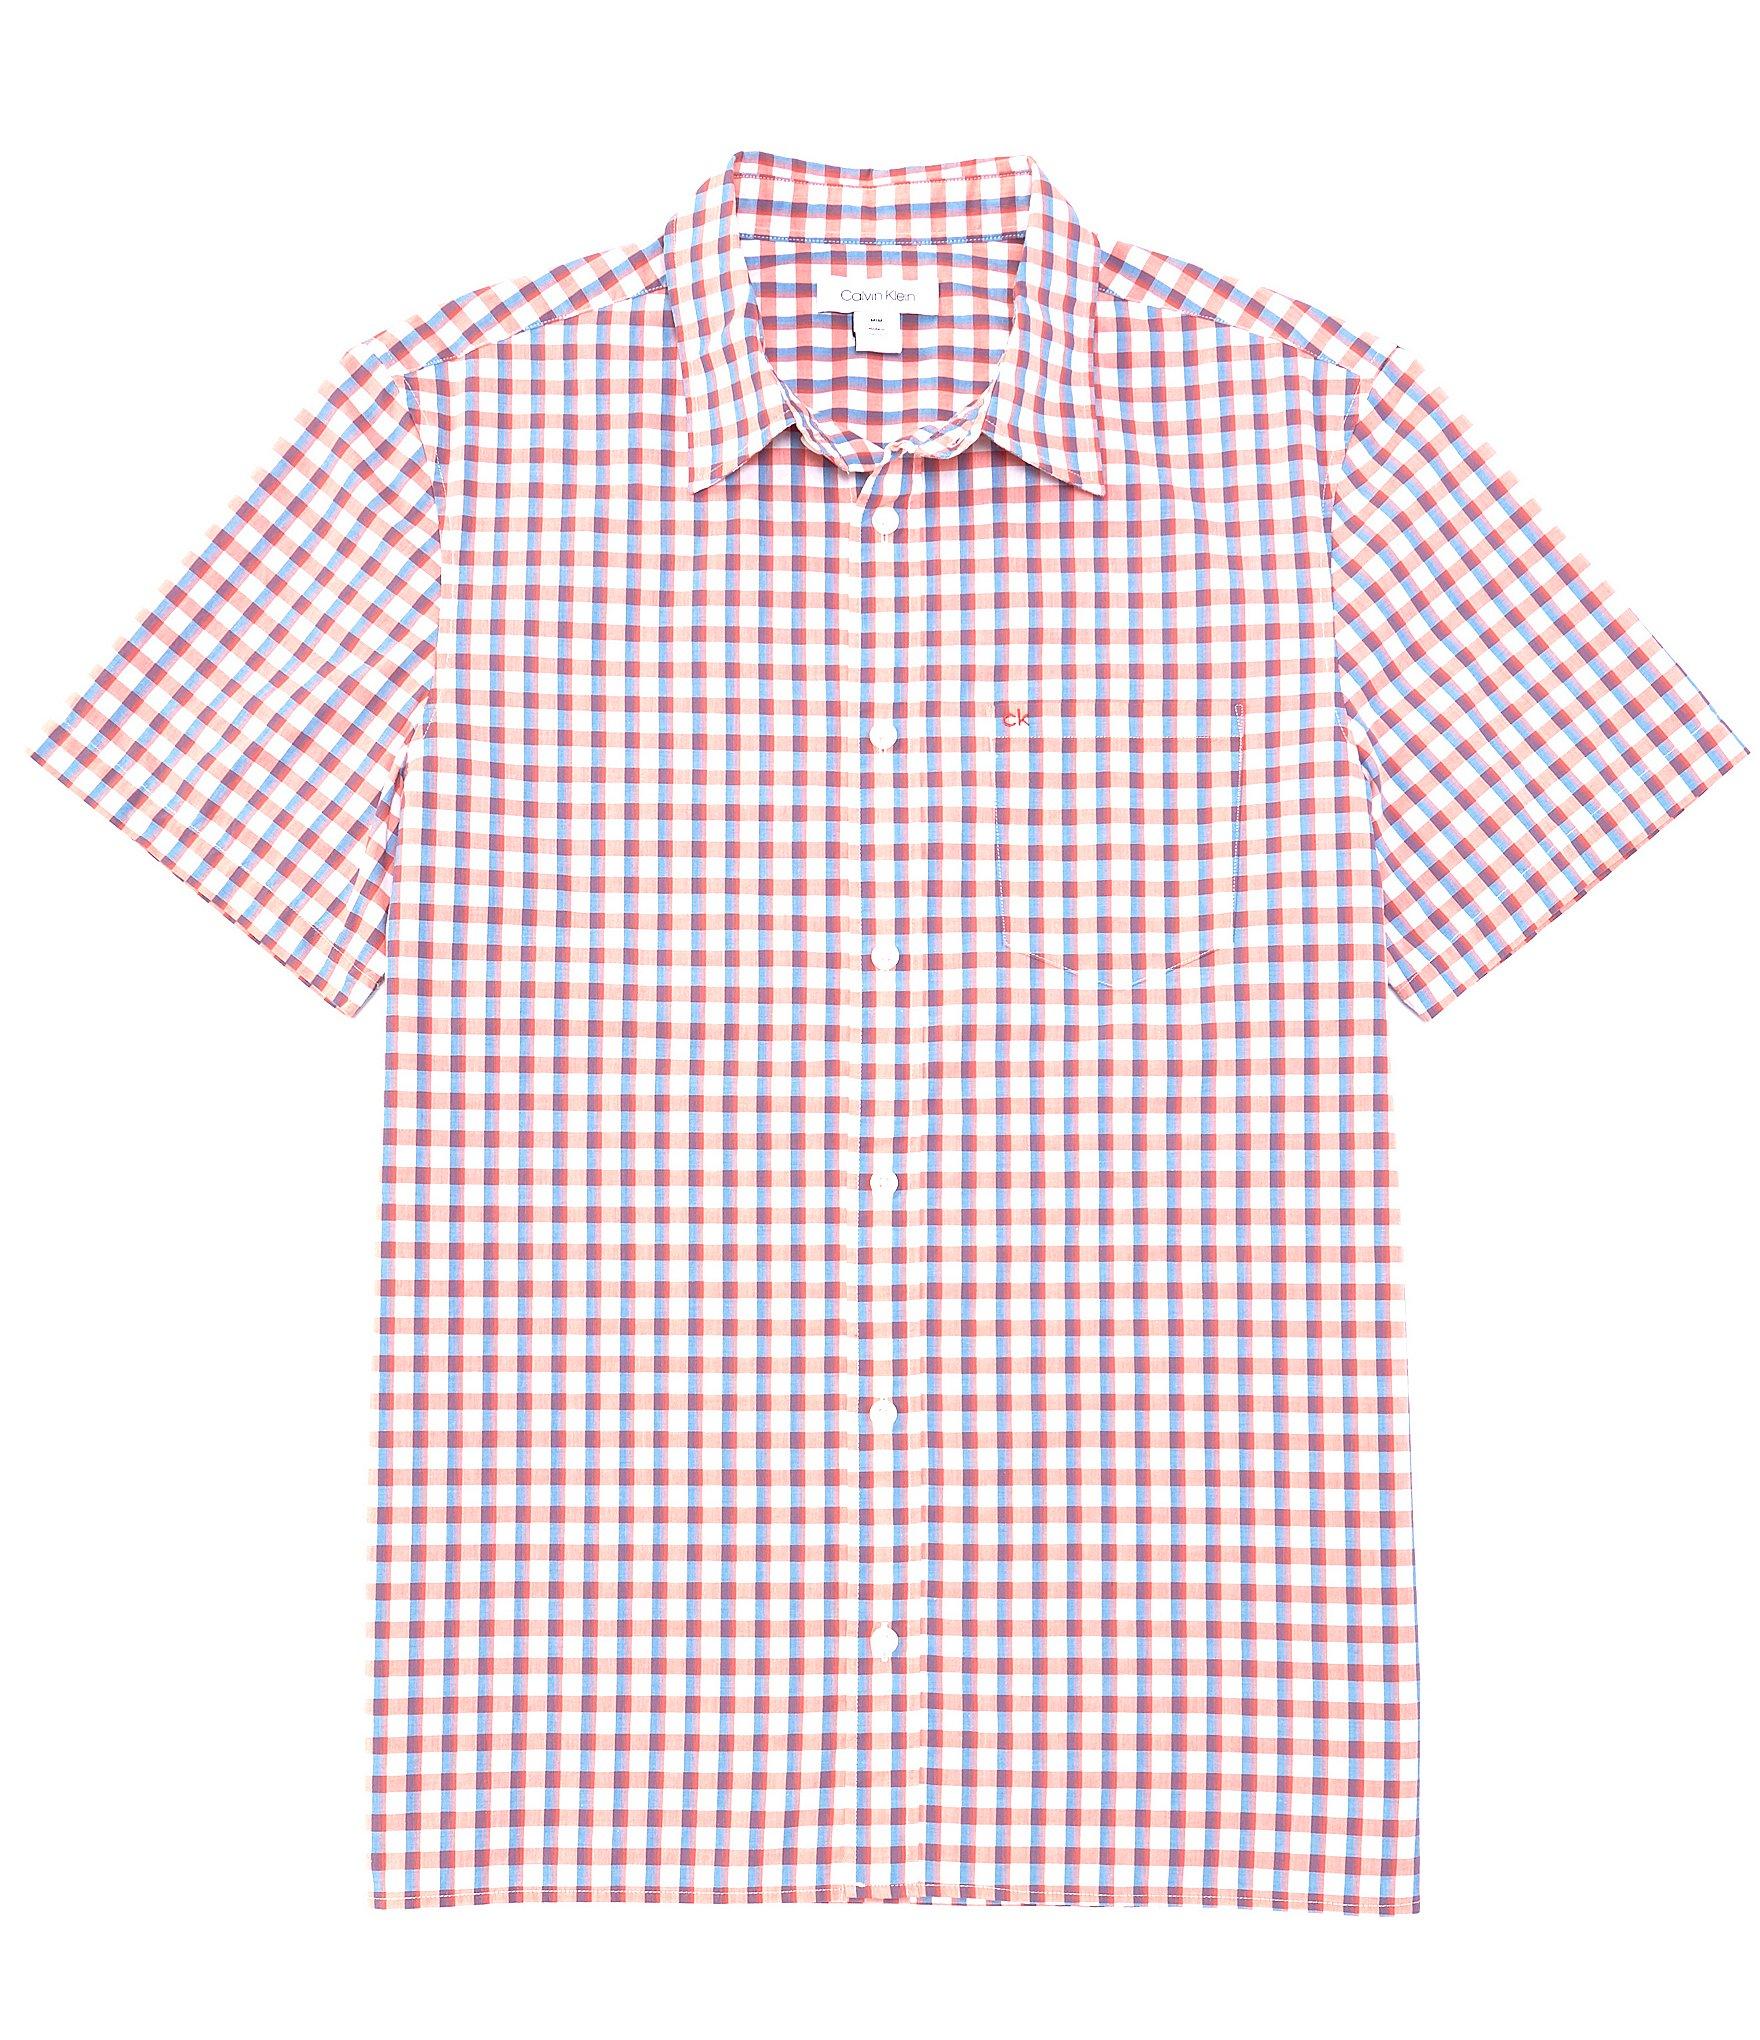 Lambretta Men/'s Short Sleeve Gingham Check Shirt With Woven Collar